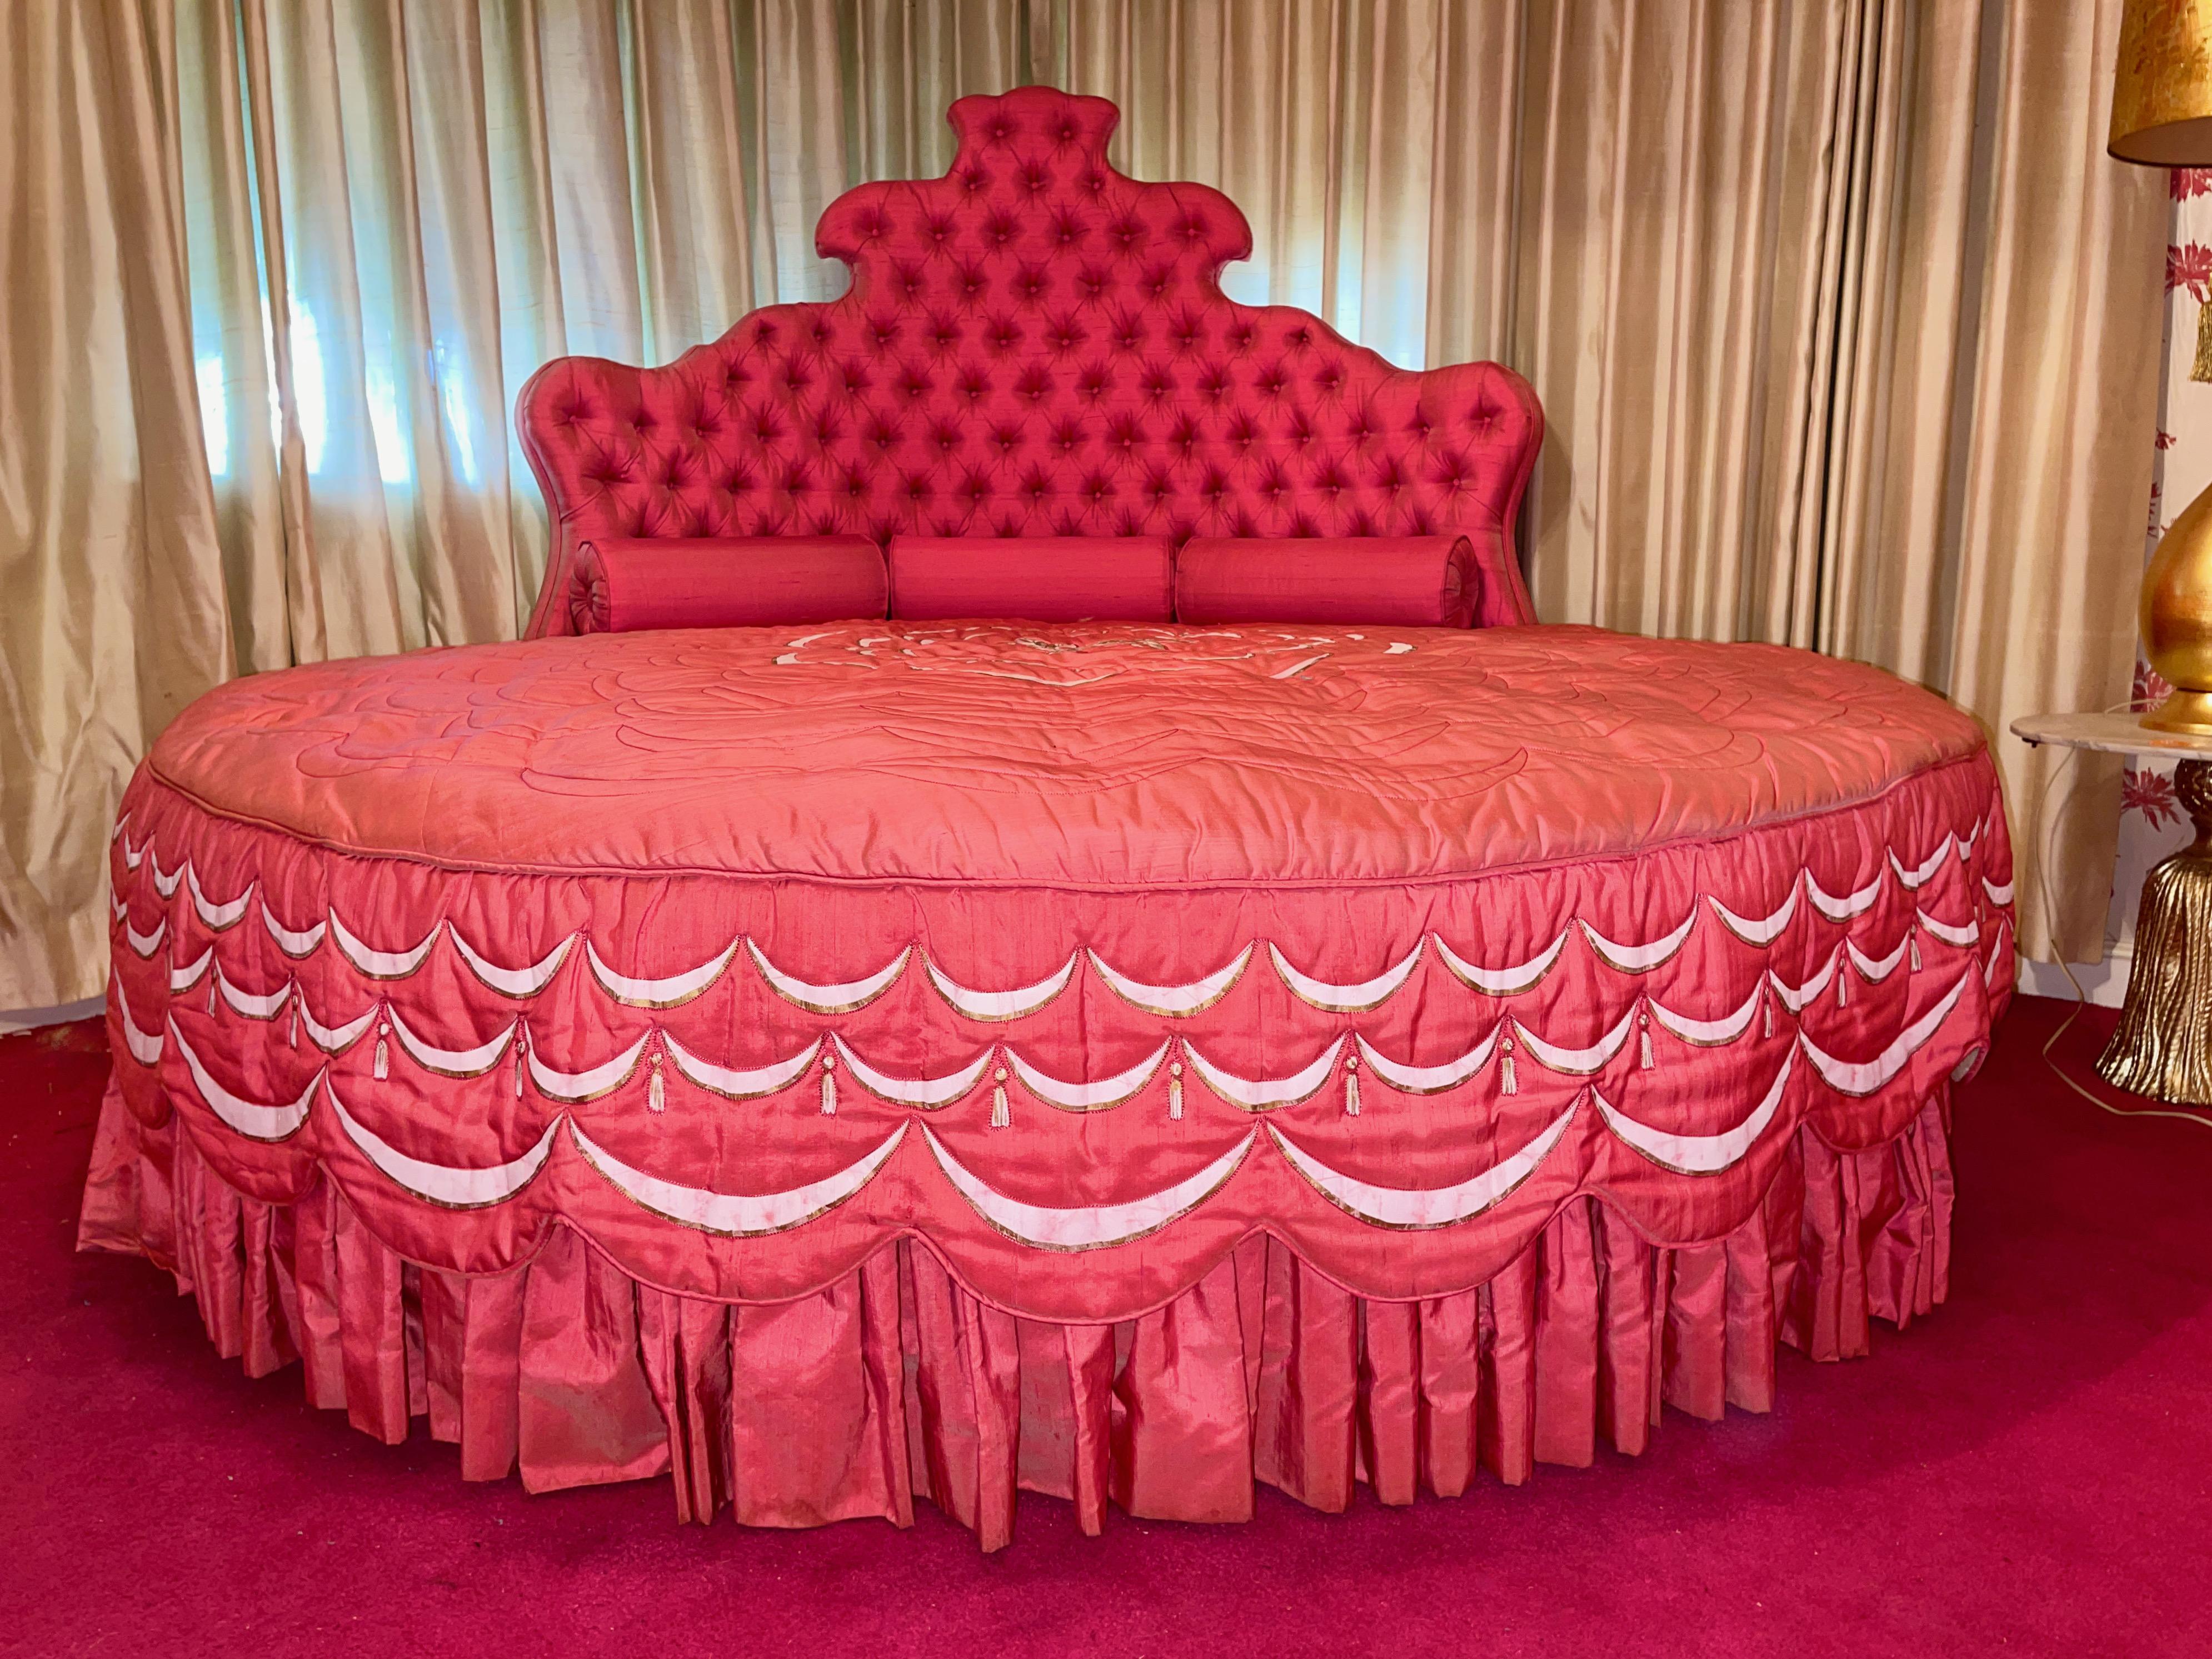 Mid-20th Century Vintage Hollywood Regency Round Bed